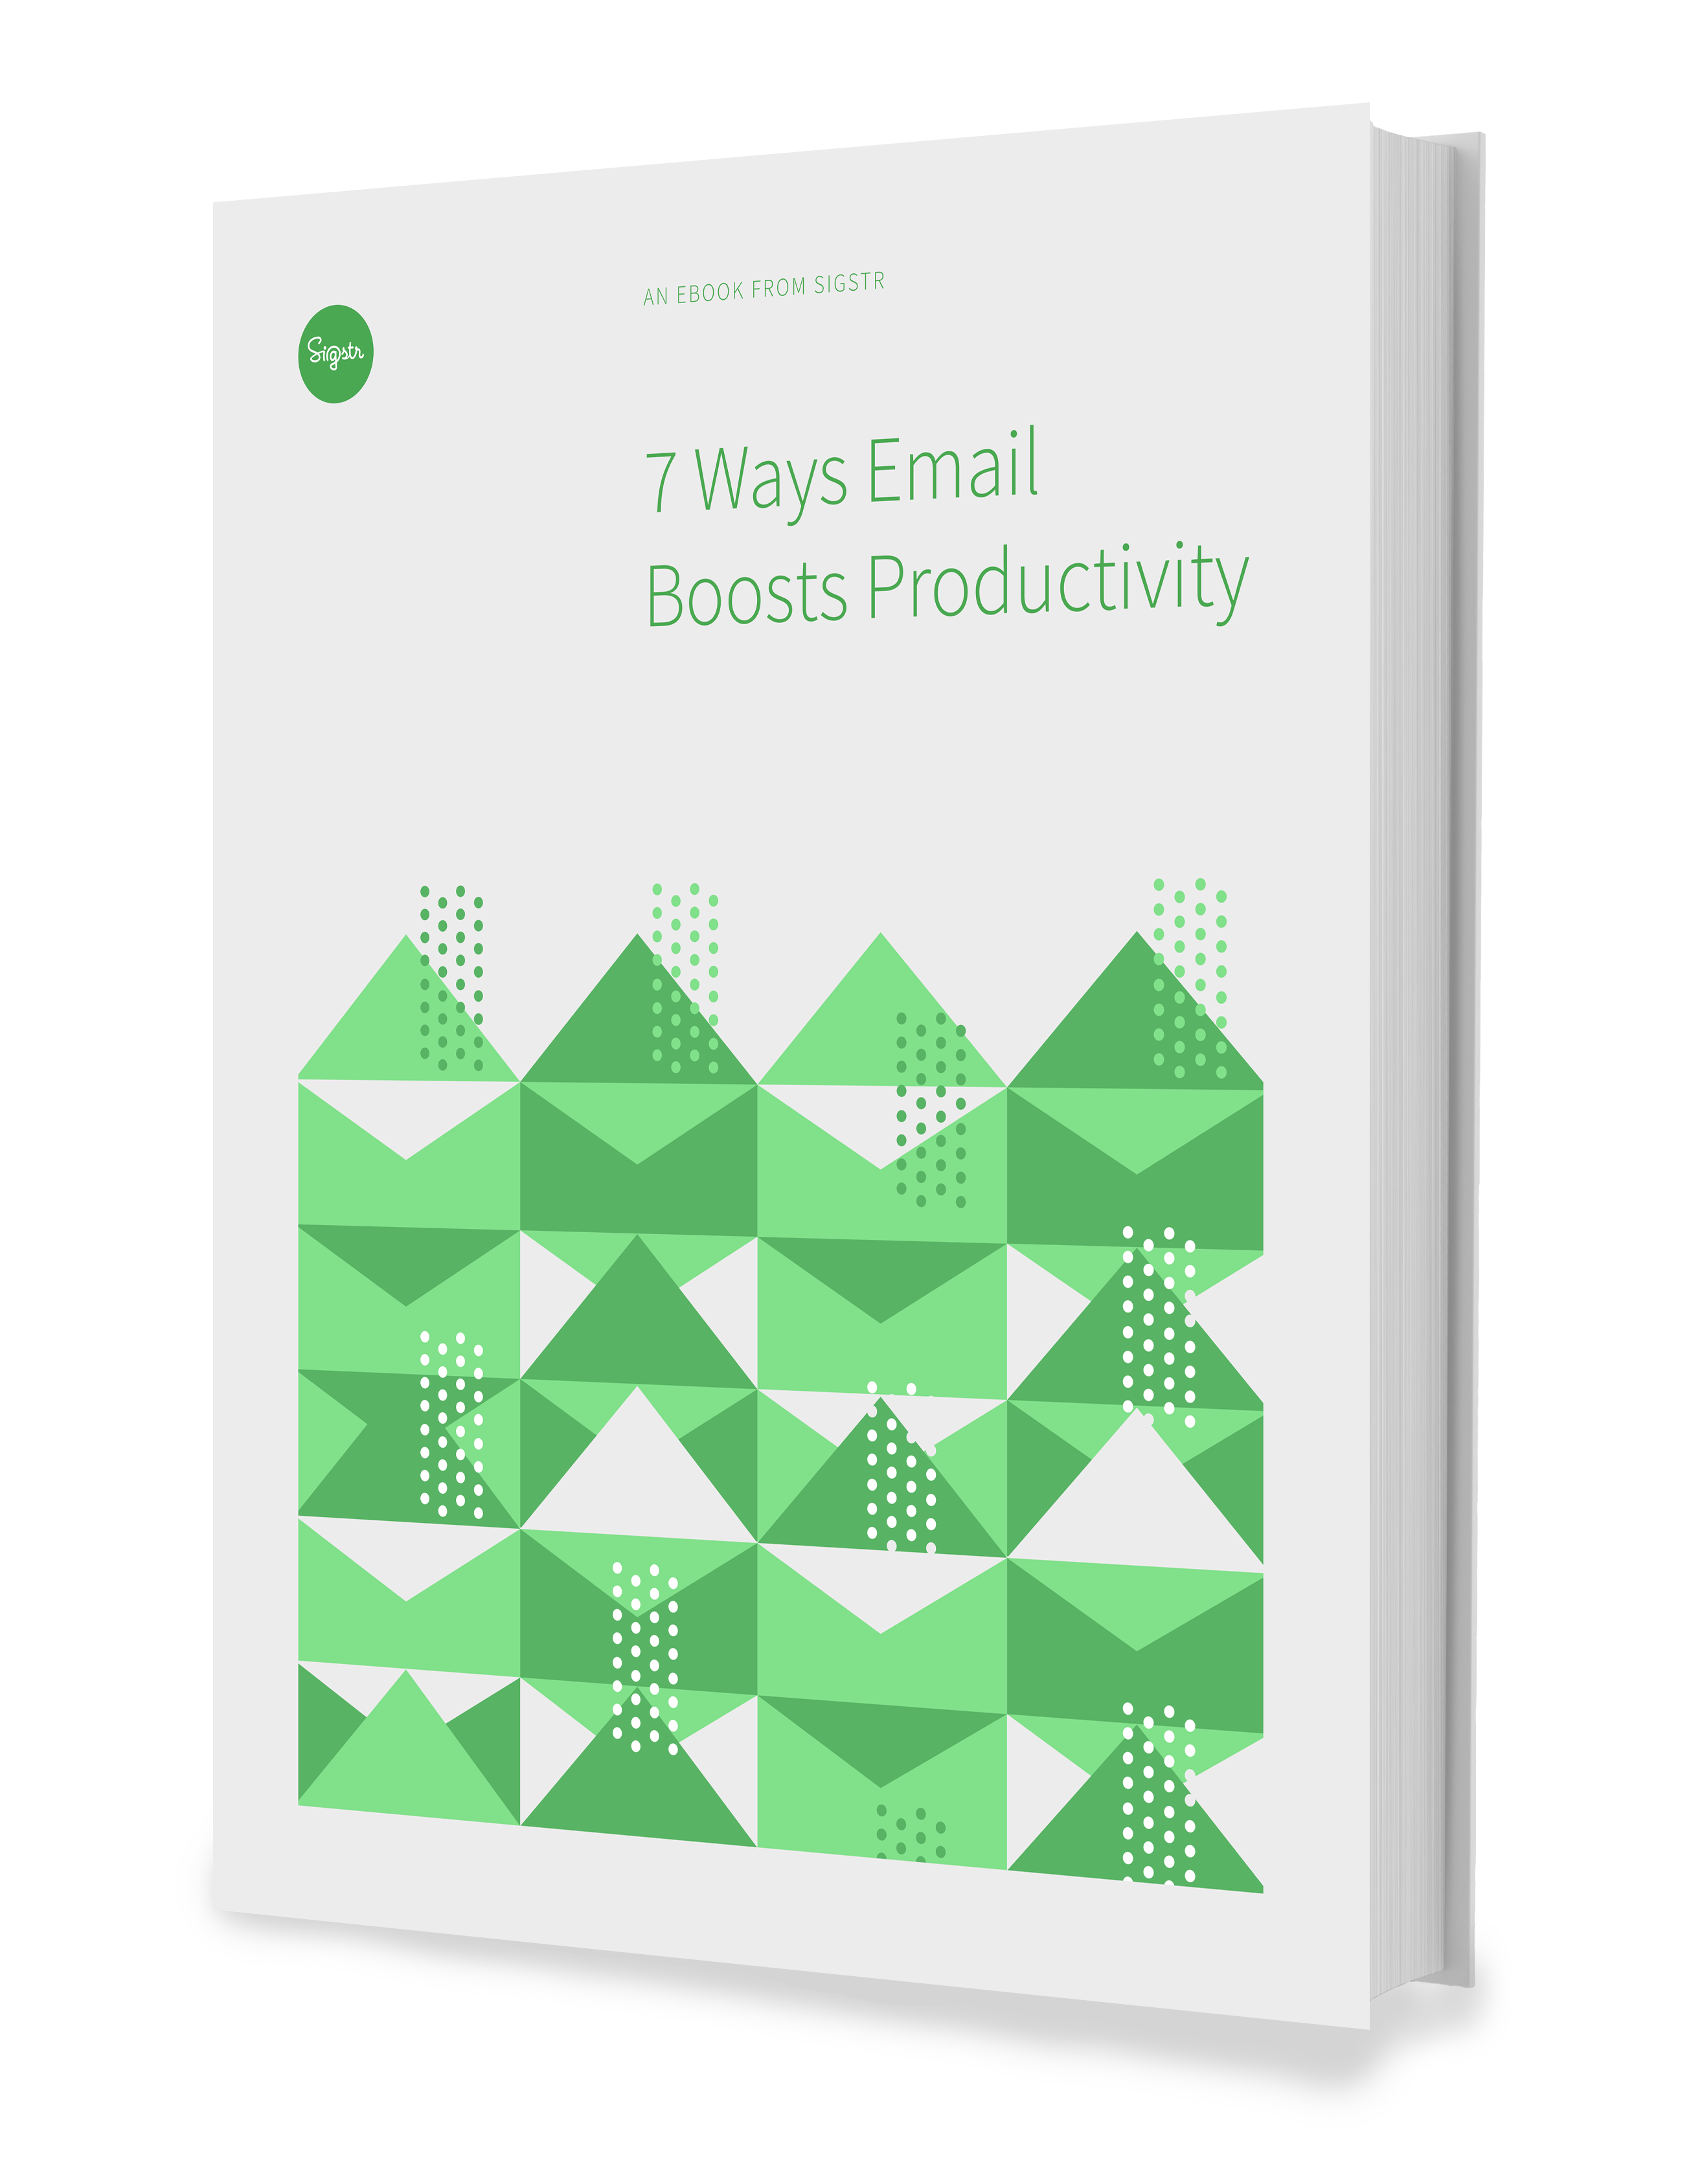 Sigstr email productivity ebook